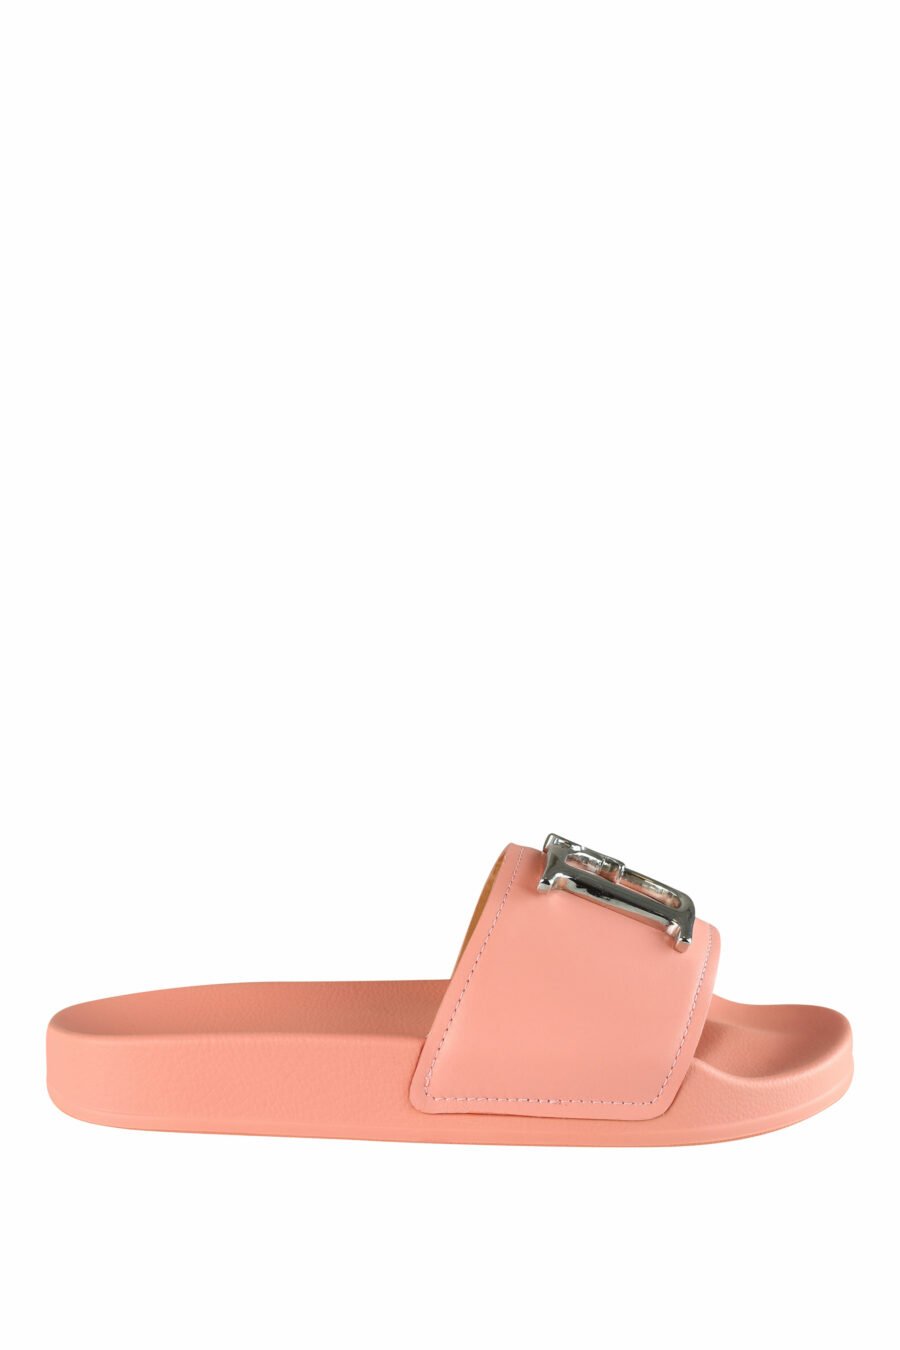 Pink flip flops with metal "D2" logo - IMG 1302